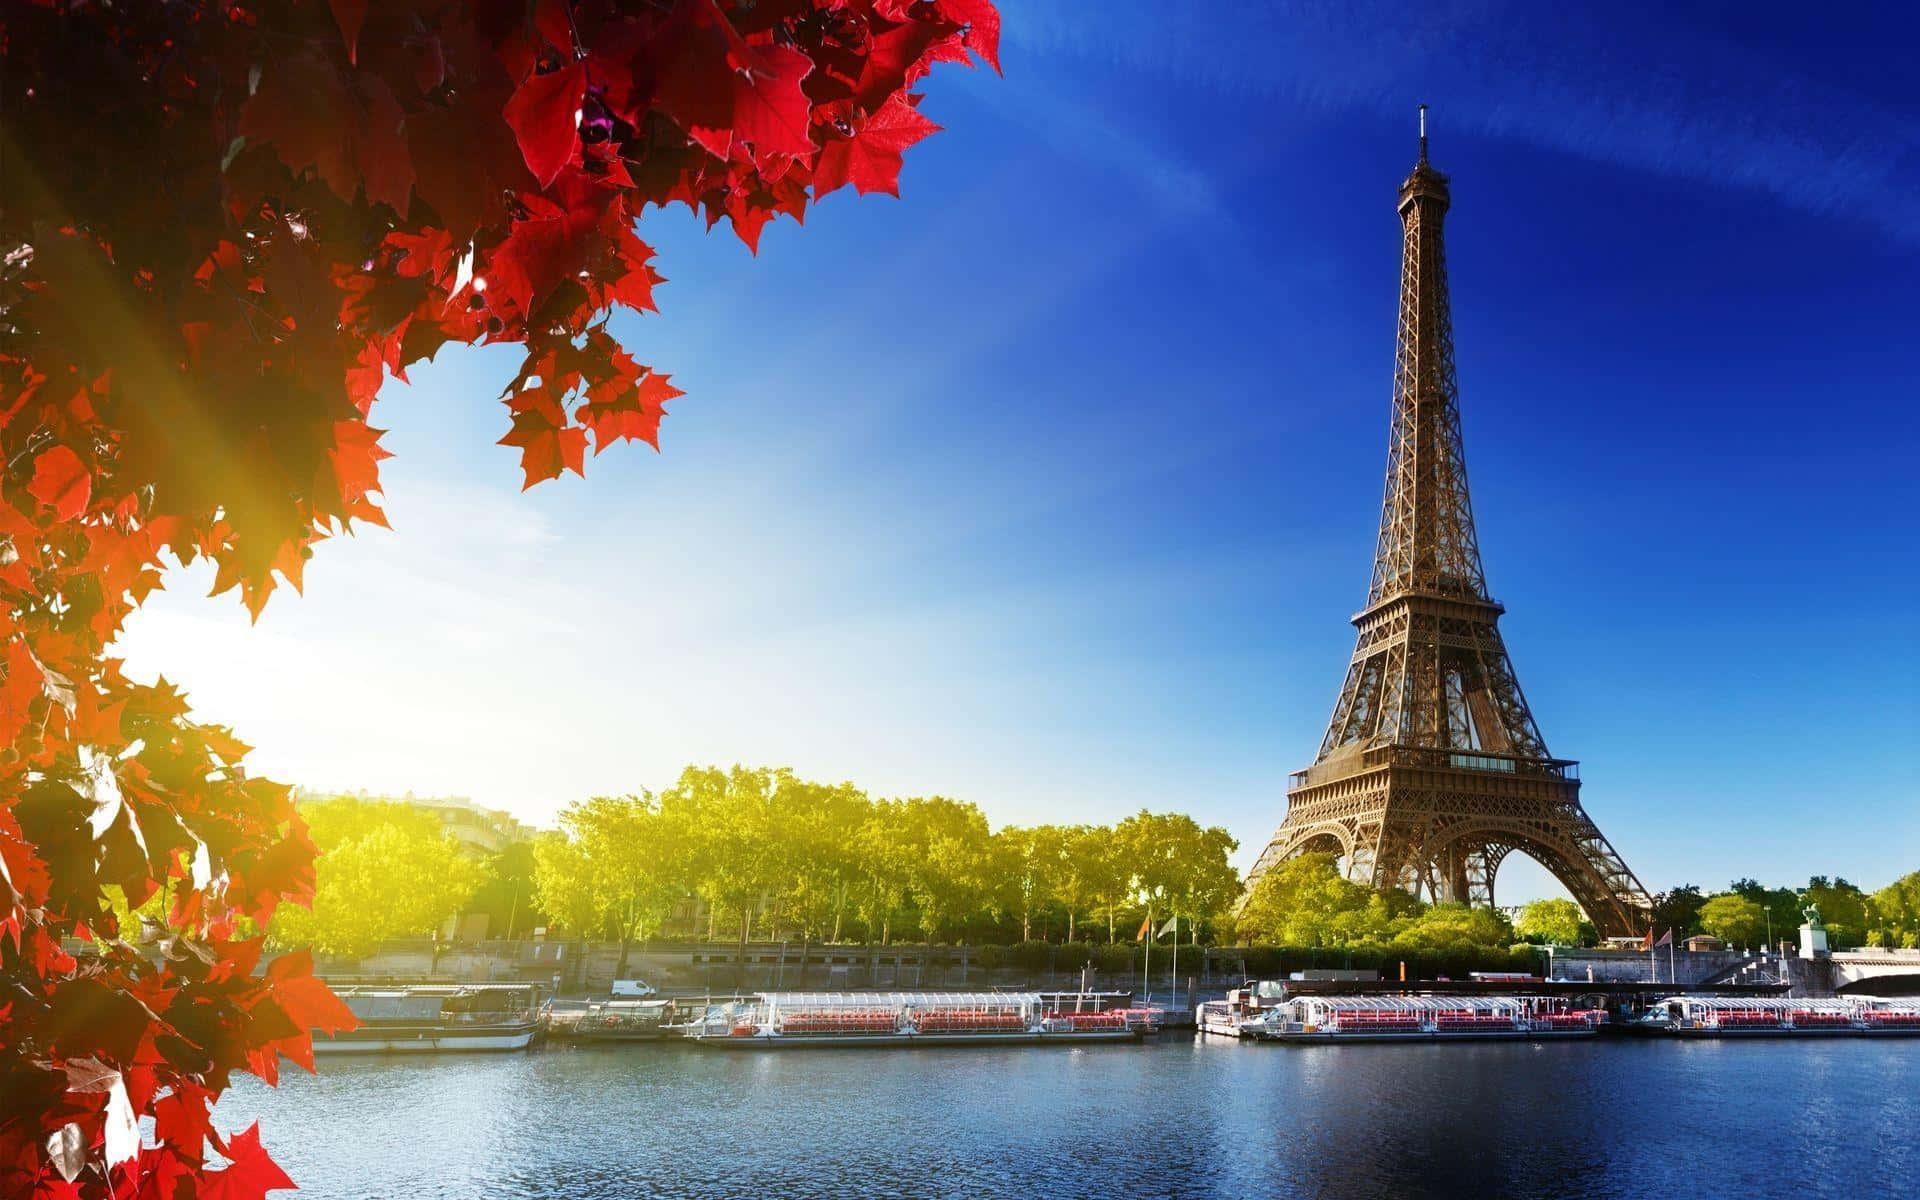 Enjoying the stunning Eiffel Tower in Paris, France